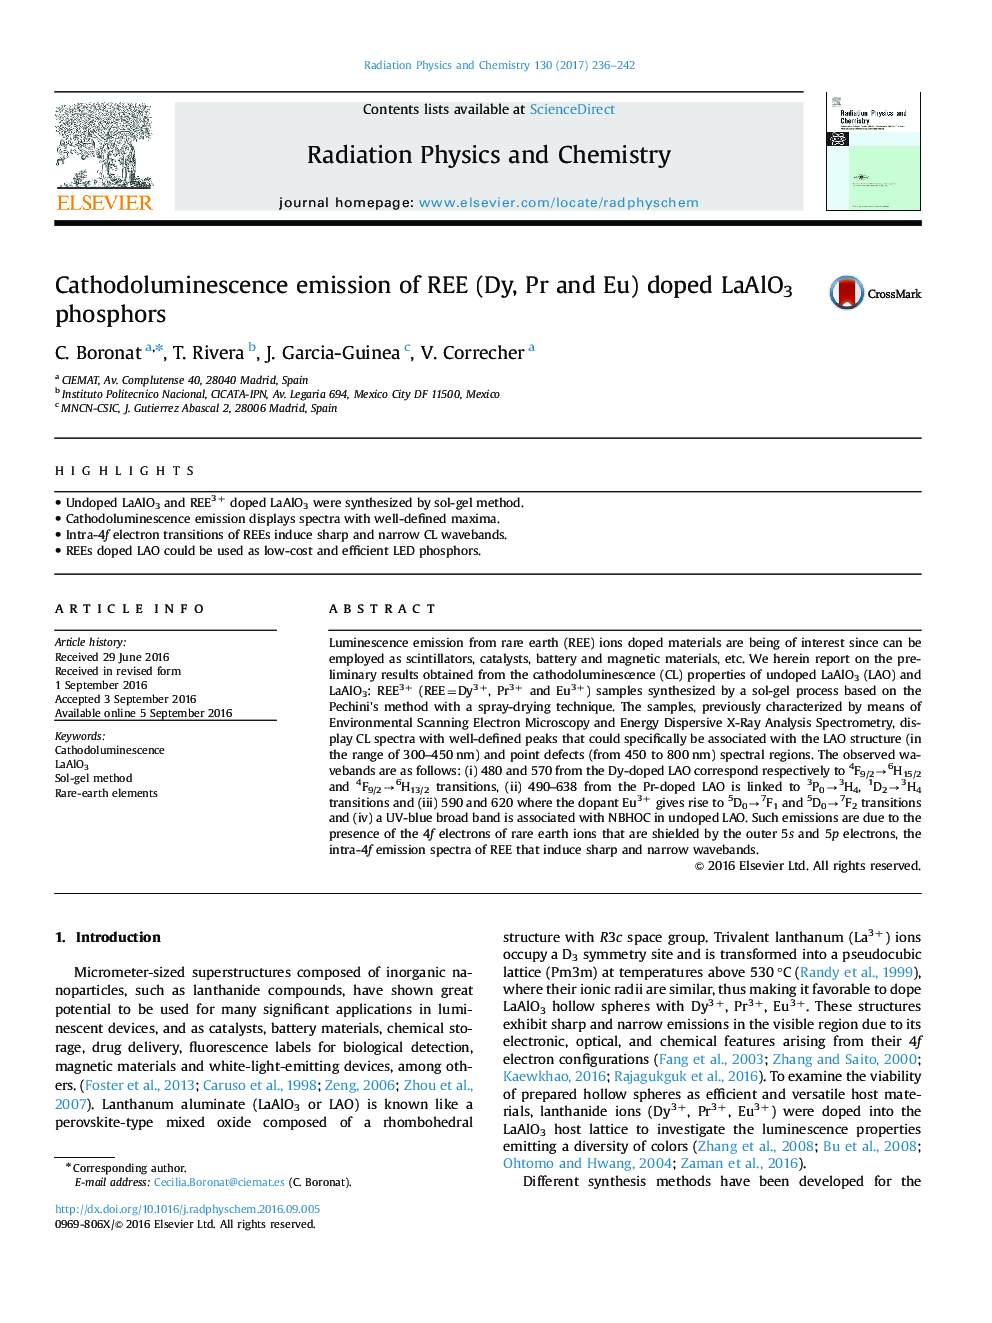 Cathodoluminescence emission of REE (Dy, Pr and Eu) doped LaAlO3 phosphors